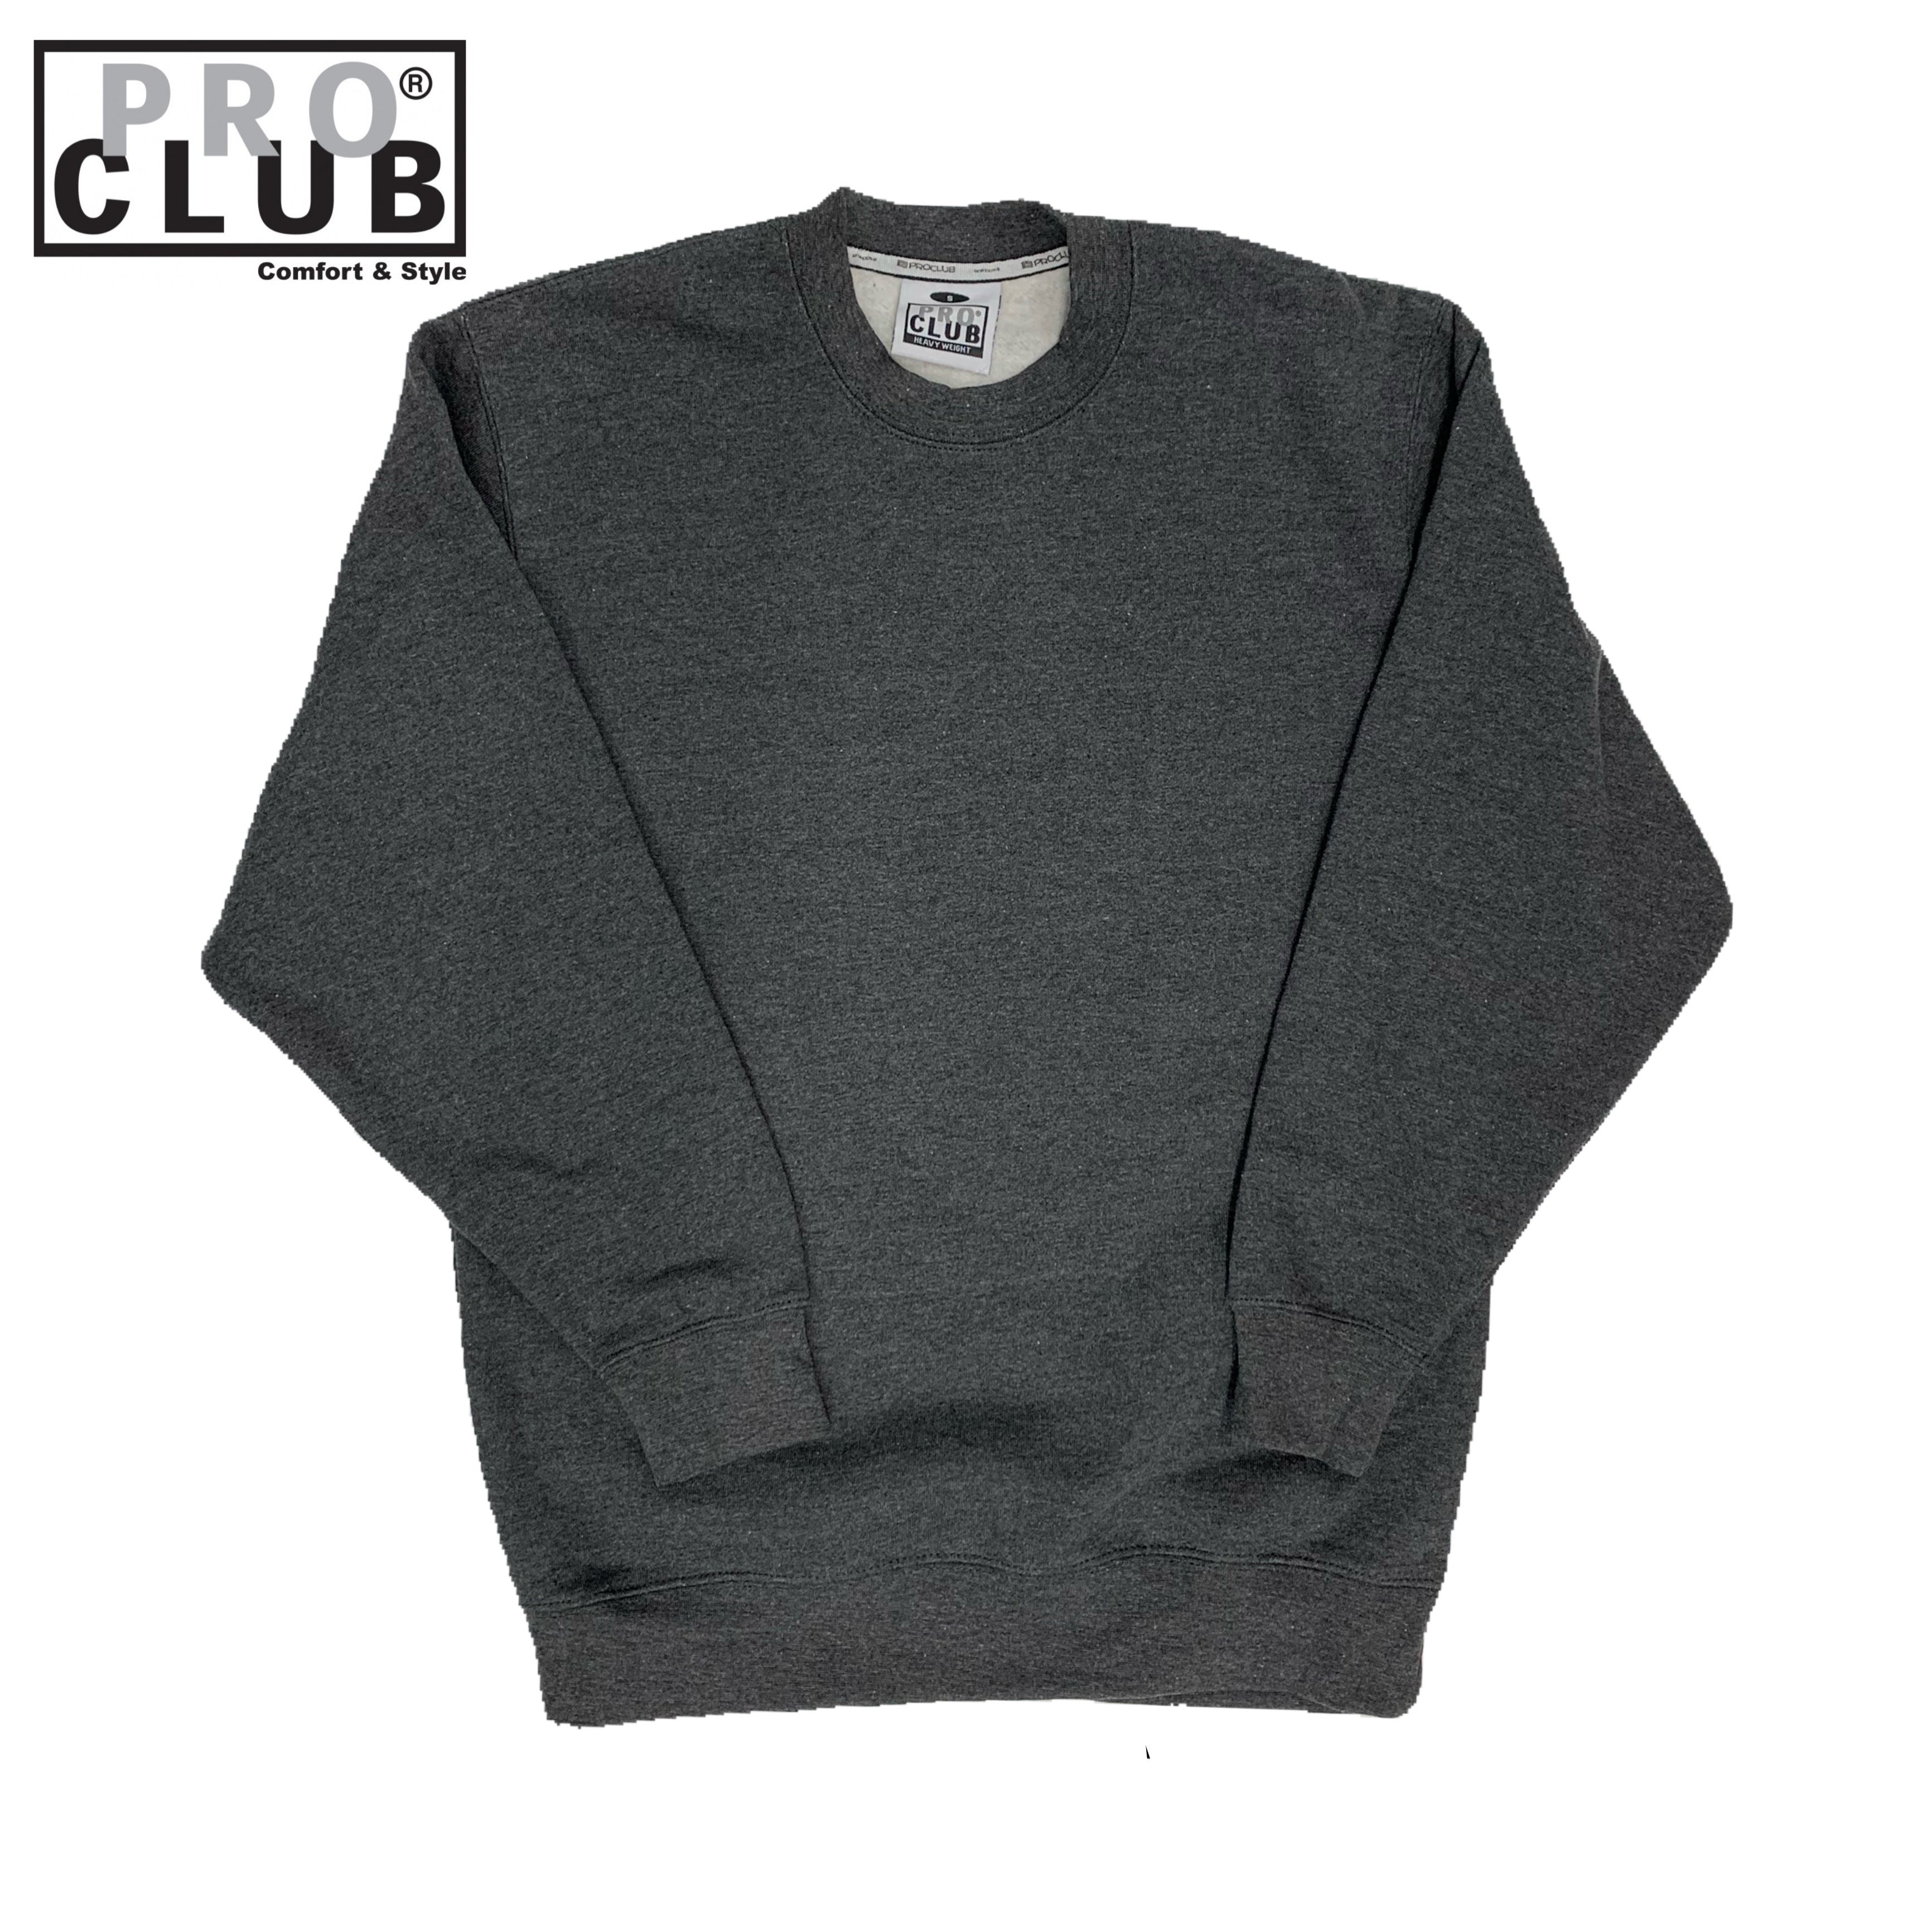  Pro Club Men's Comfort Pullover Hoodie (9oz), Small